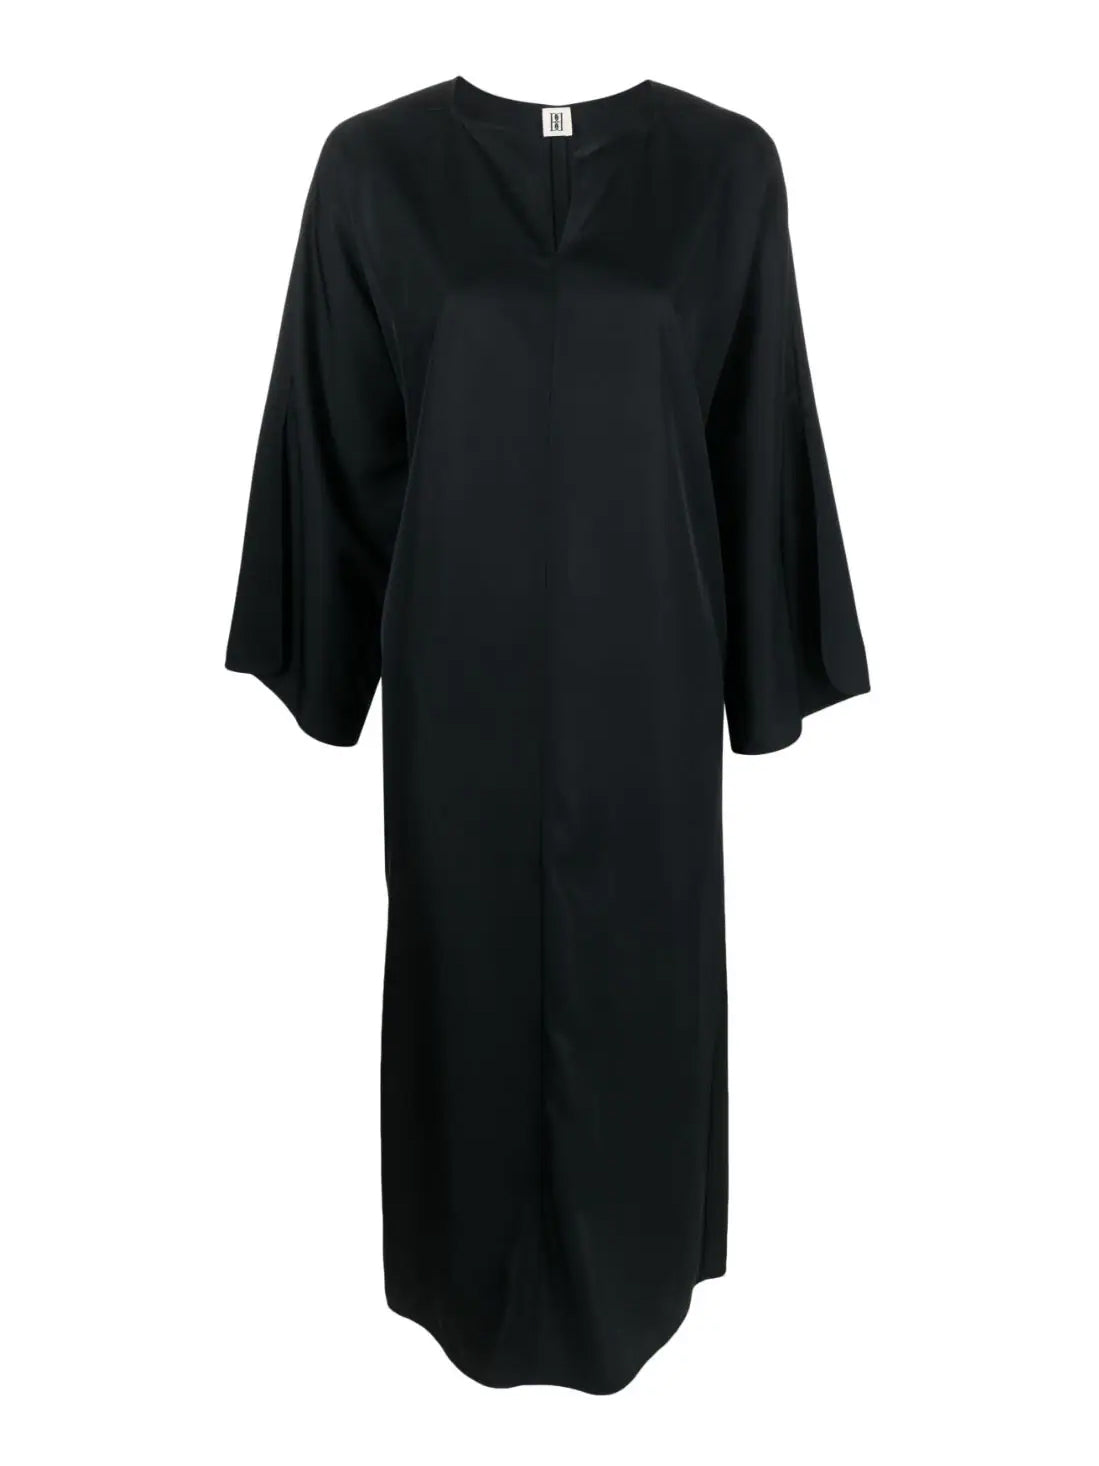 Malene Birger: CAIS dress, black. Sold at My o My Helsinki. 